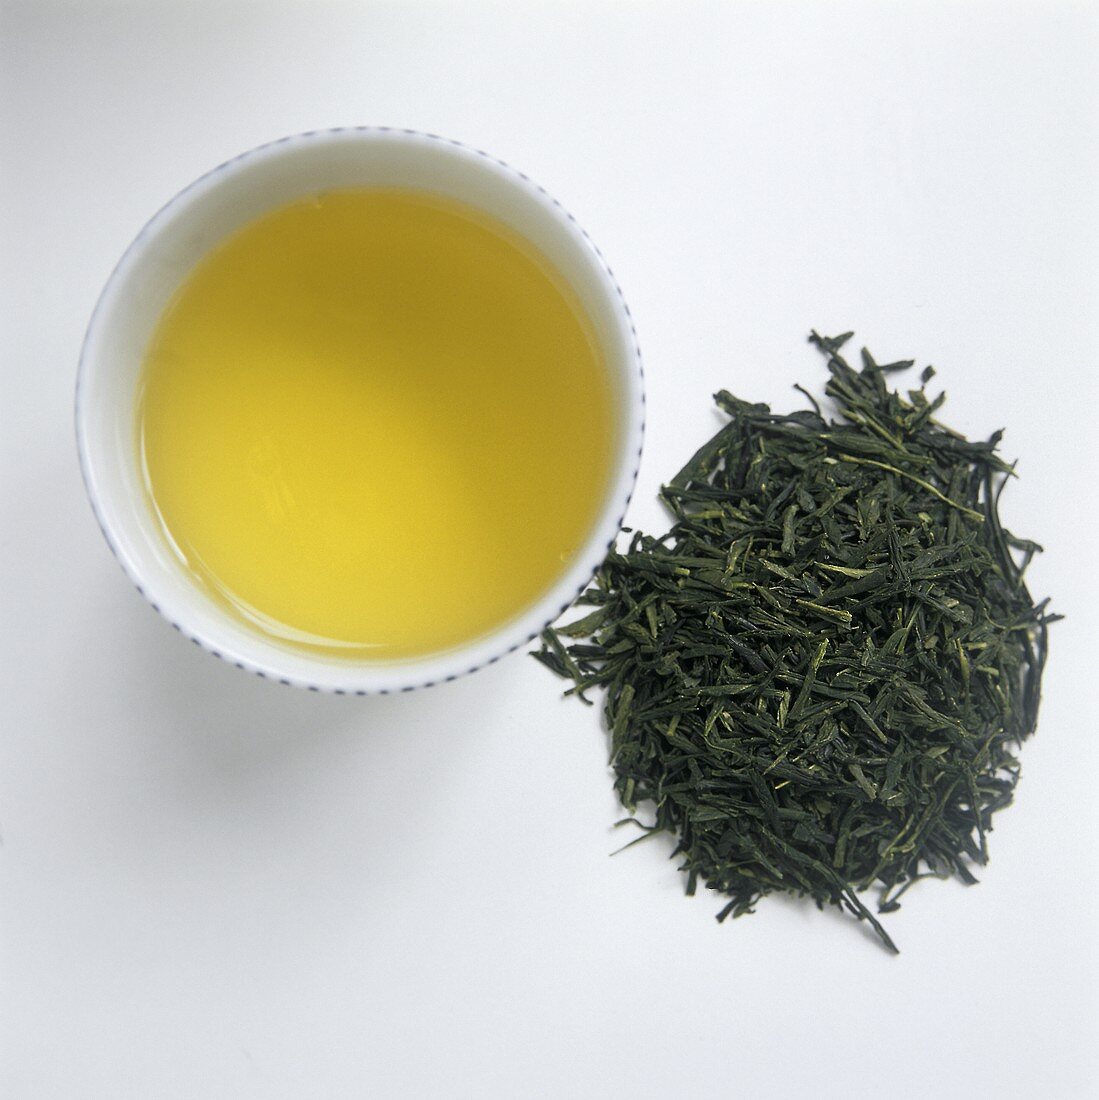 Sencha (japanischer grüner Tee) & Sencha-Teeblätter